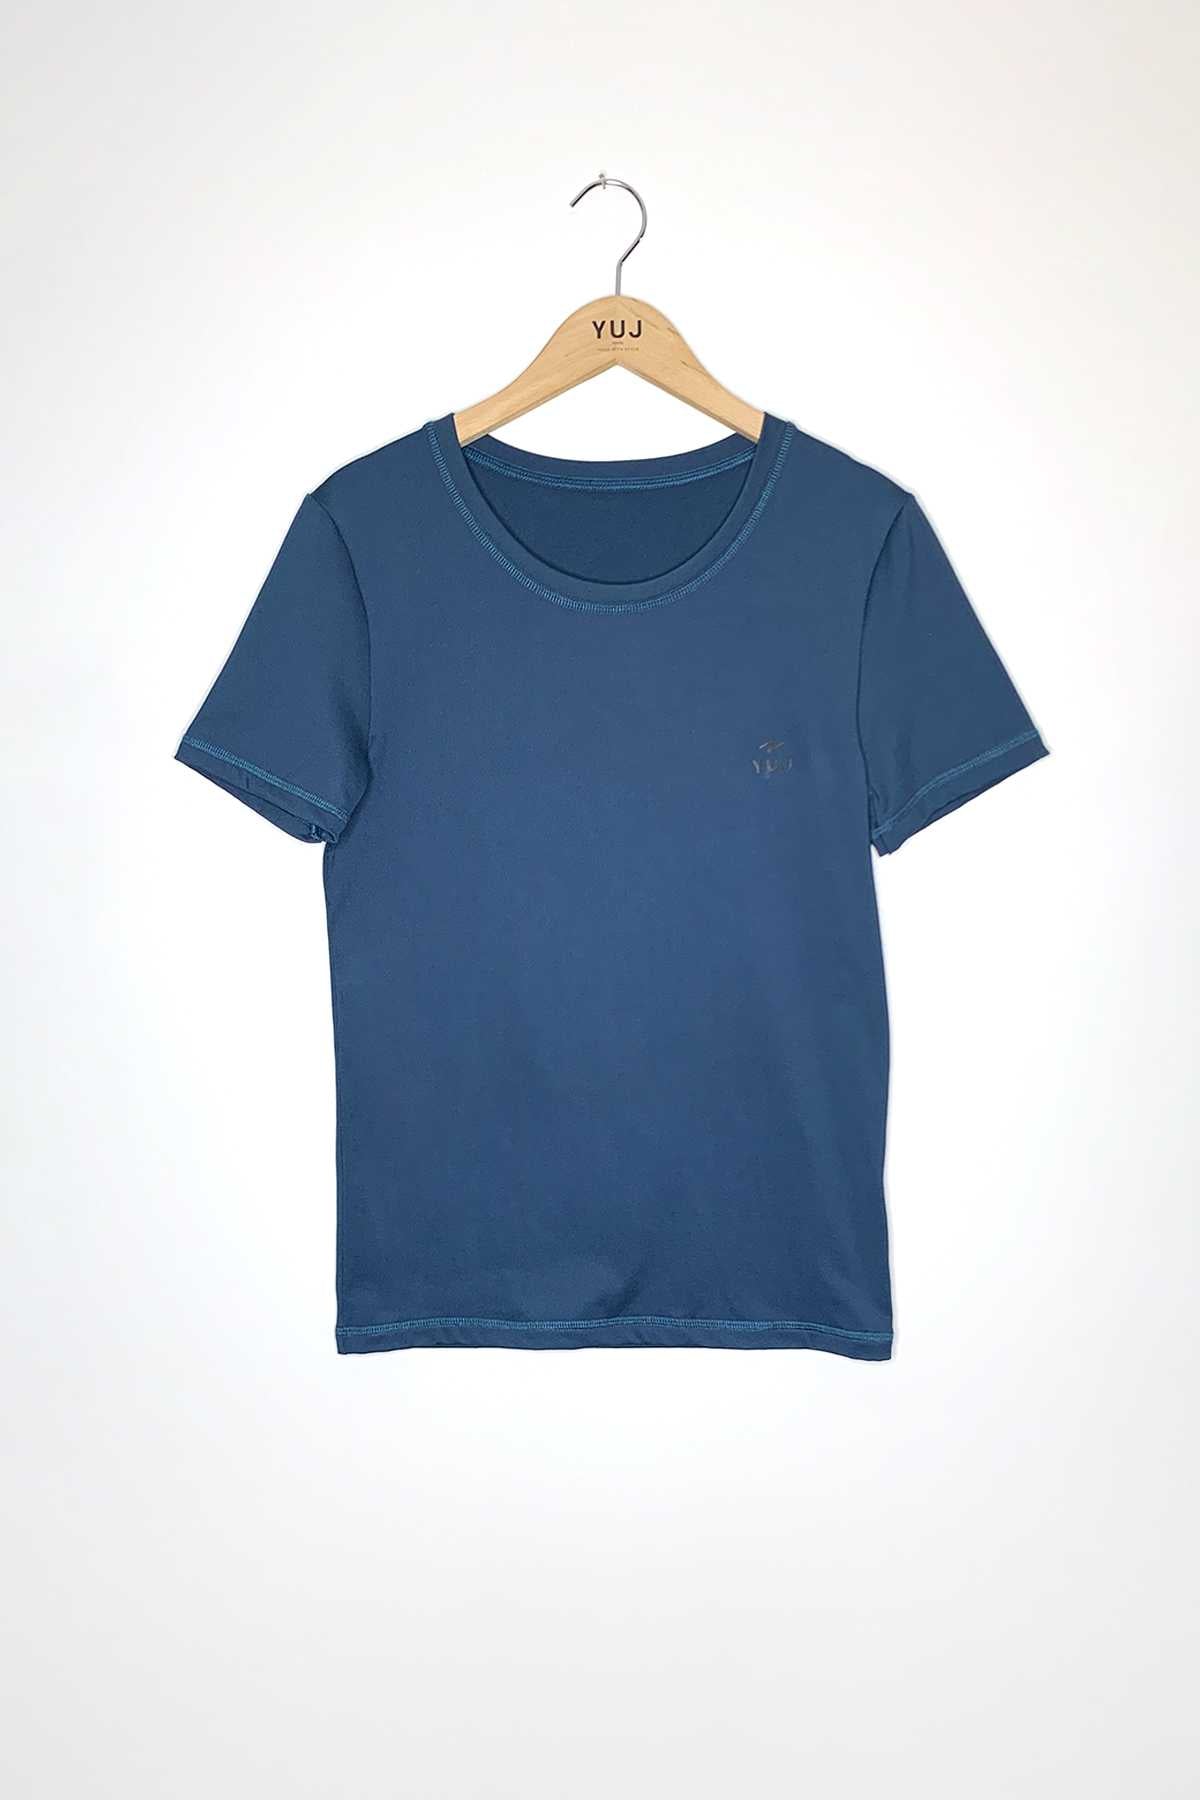 346 - YUJ X DAMART men's thermolactyl t-shirt // Size S – YUJ Paris Store